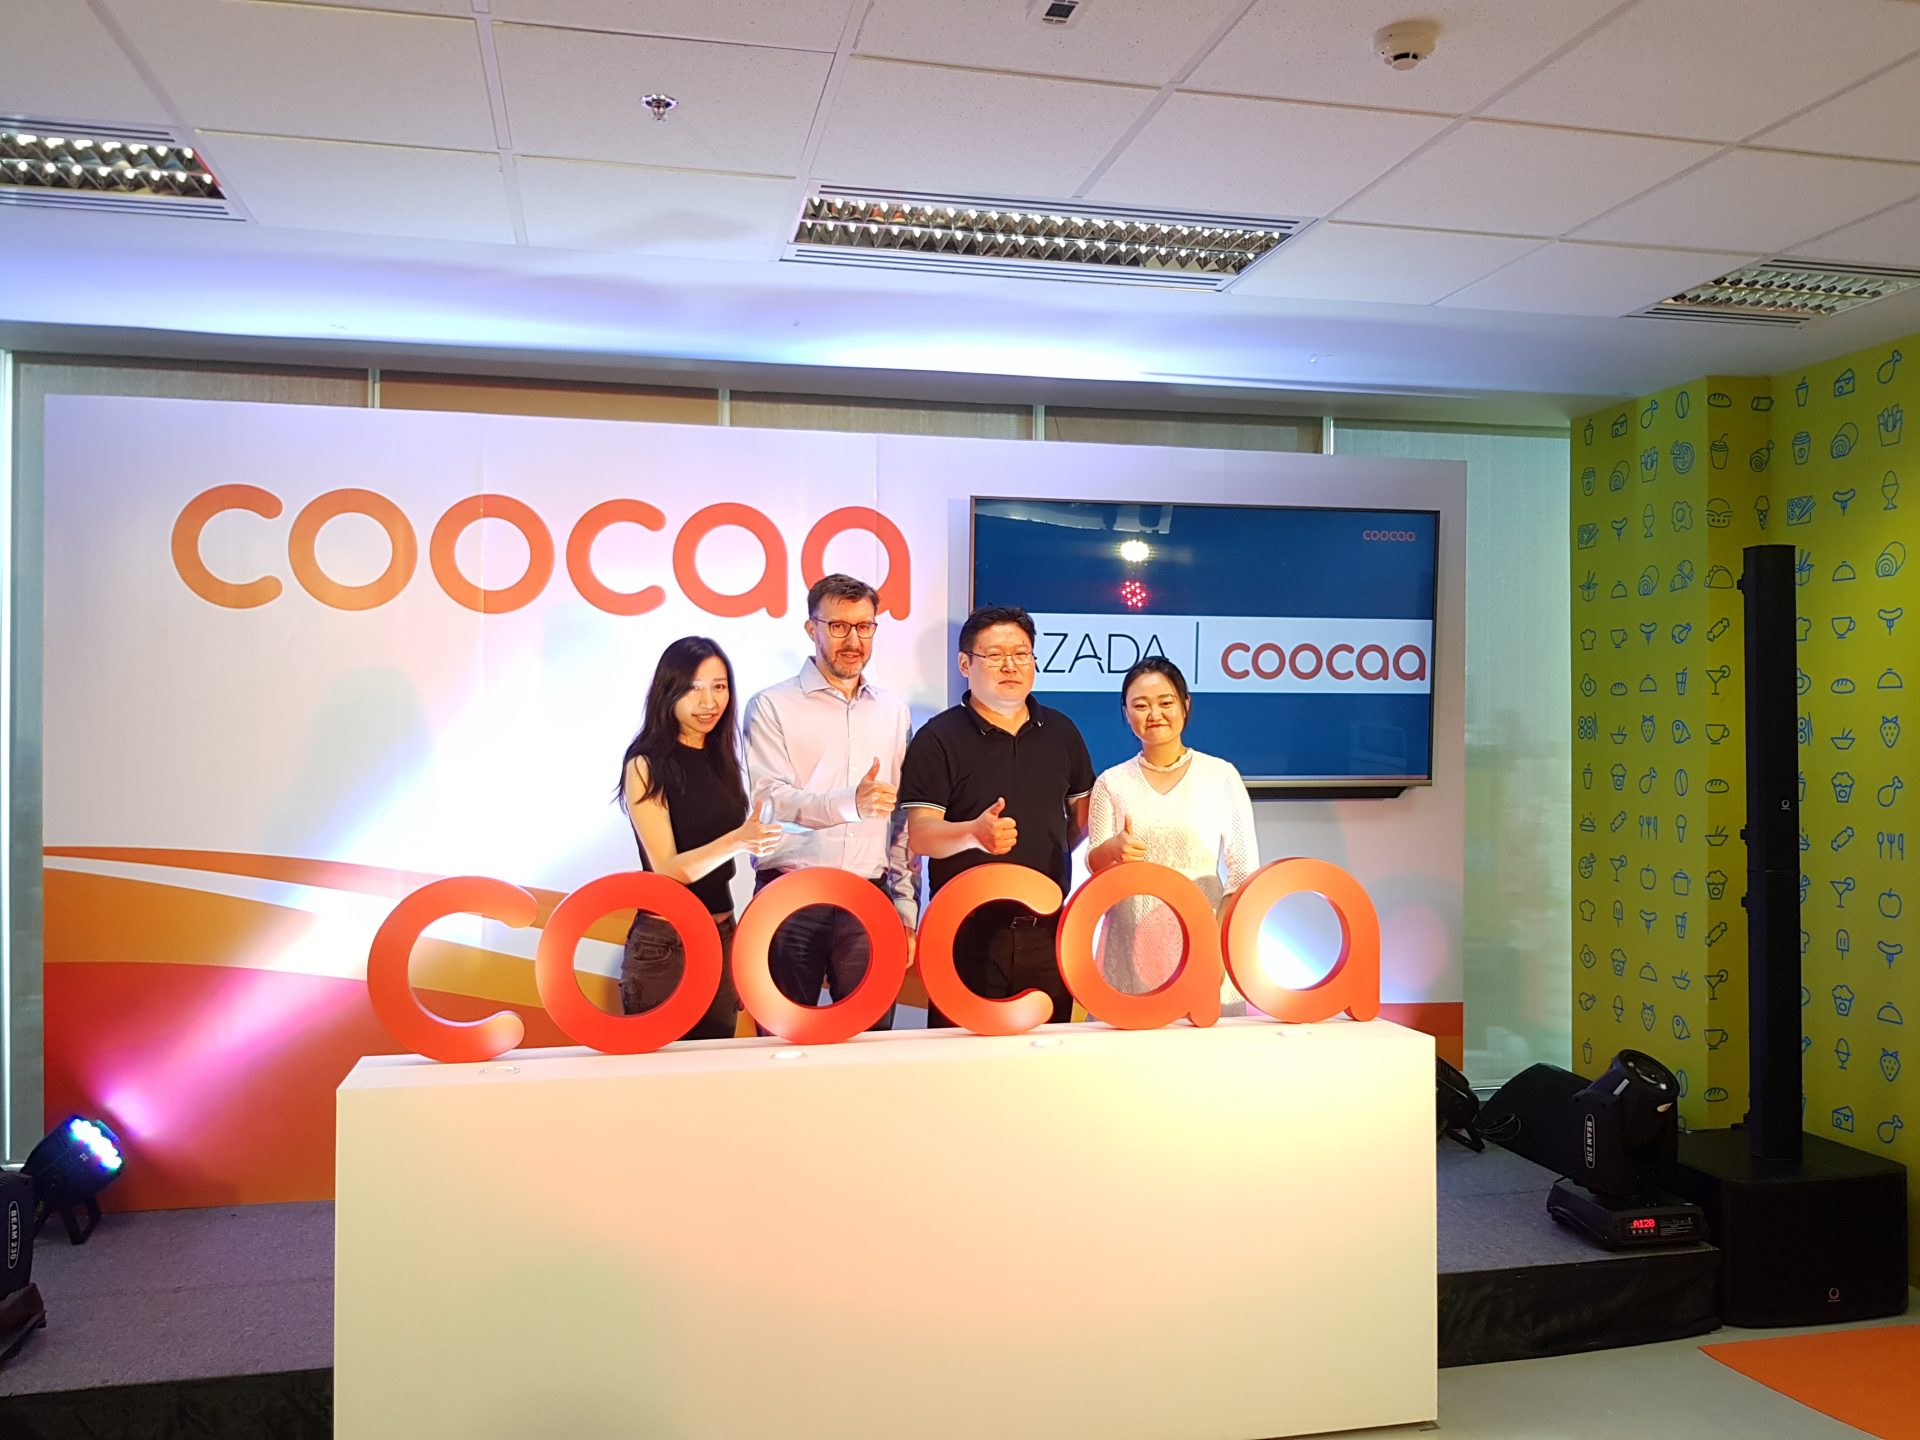 Coocaa แบรนด์ Smart TV ราคาโดนใจคนรุ่นใหม่ เปิดตัวในไทยพร้อมจับมือ Lazada จัดโปรฯ สุดช็อคเริ่มต้น 5,490 บาท 1 – 3 ธ.ค. นี้!